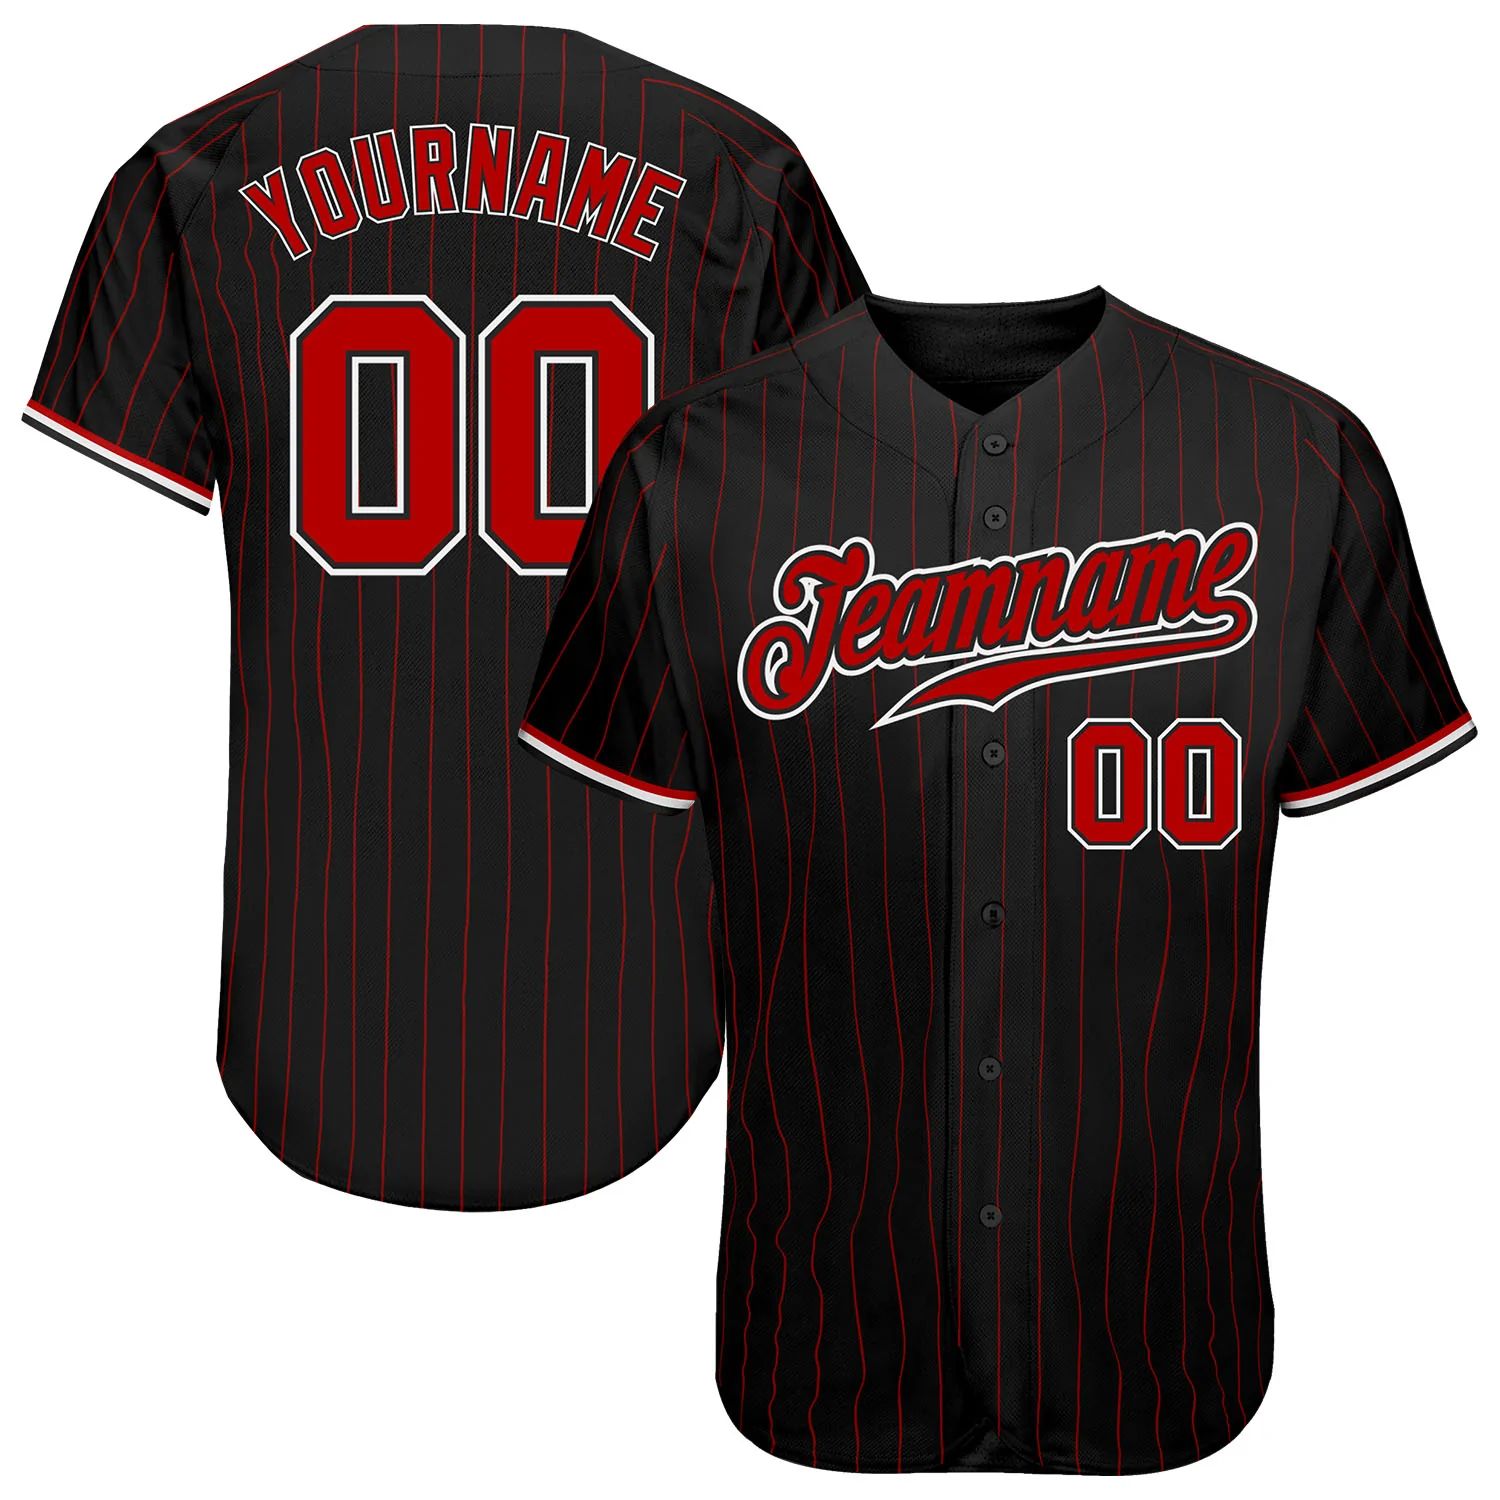 build-white-black-pinstripe-baseball-red-jersey-authentic-black0377-online-1.jpg